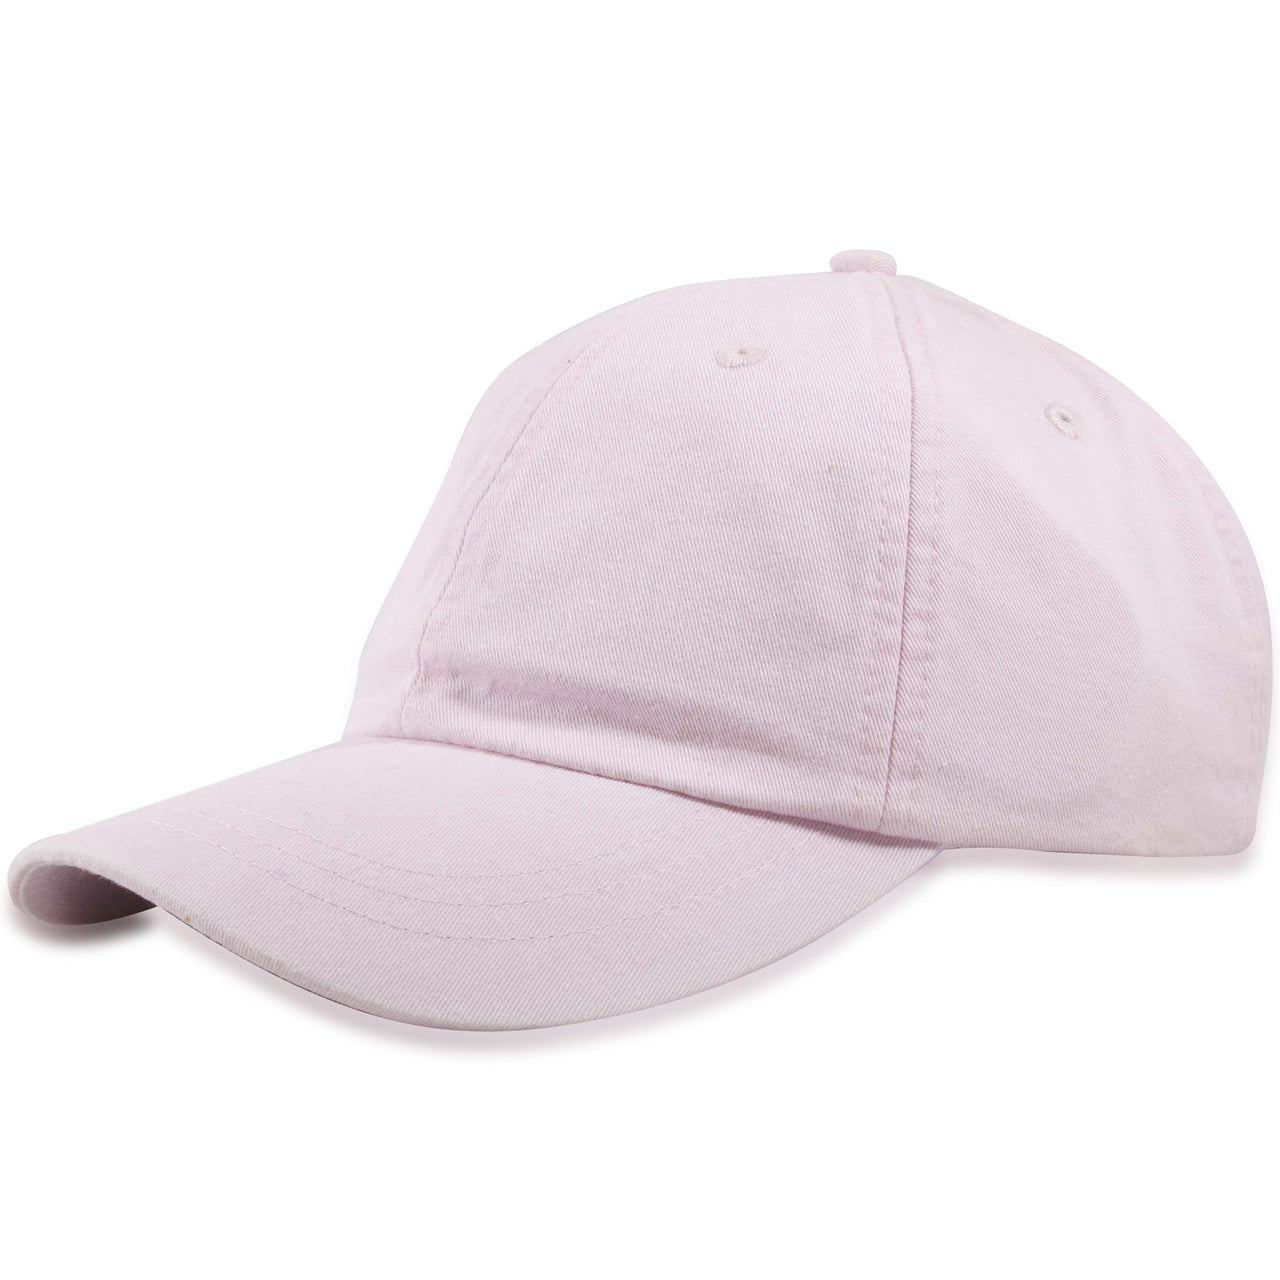 Pale Pink Blank Adjustable Cotton Baseball Cap